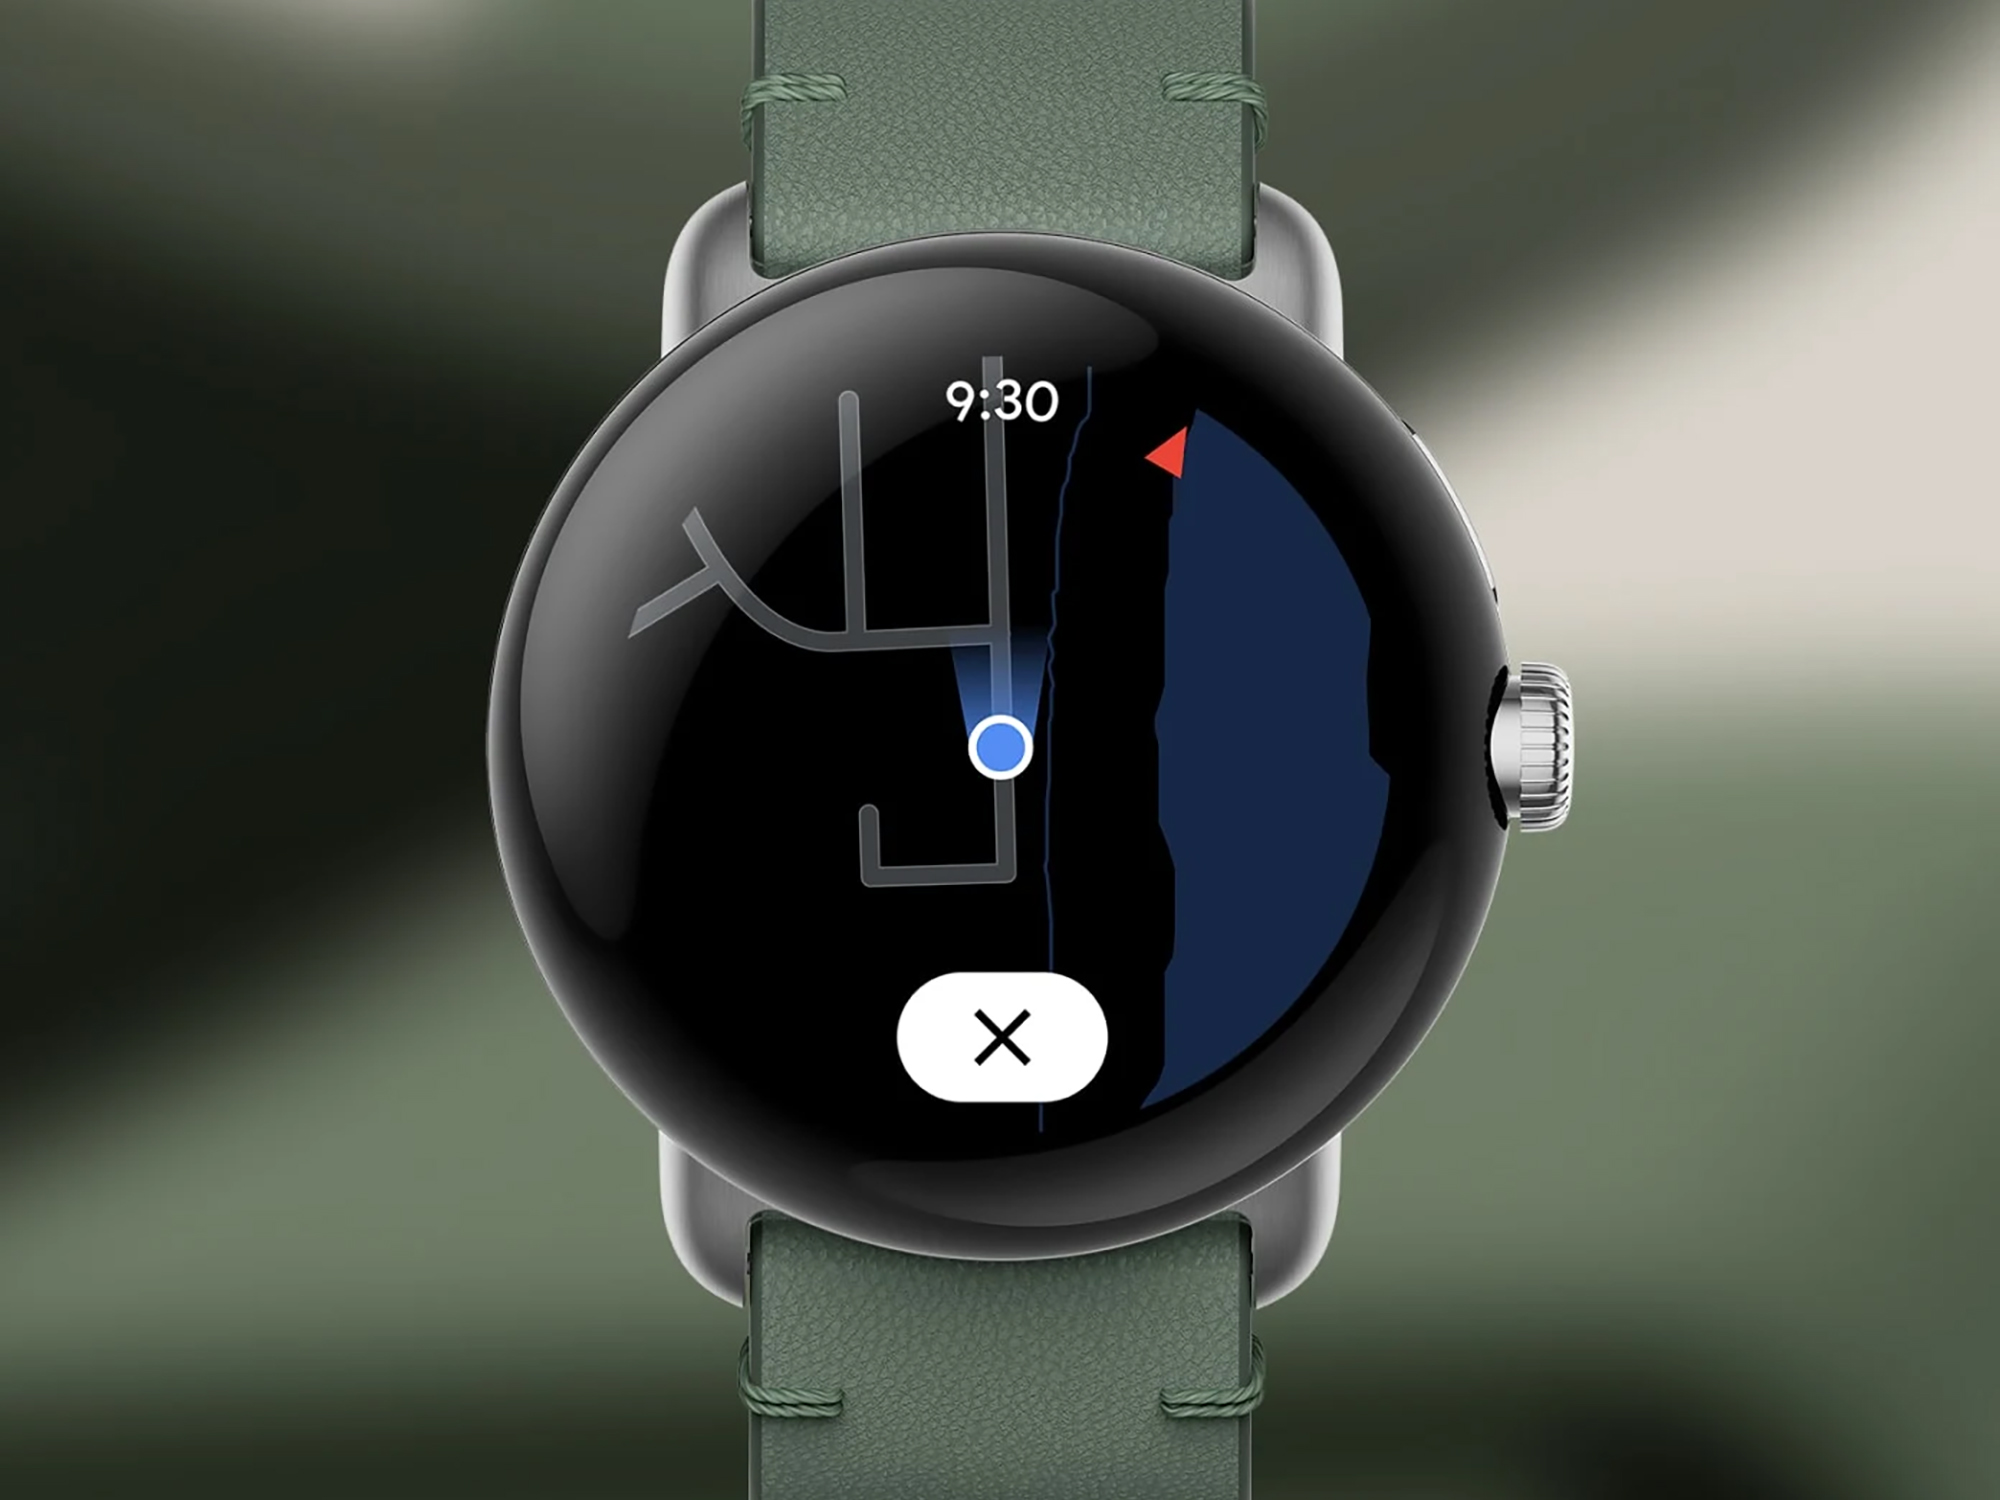 A Pixel Watch showing its Google Maps navigation display.